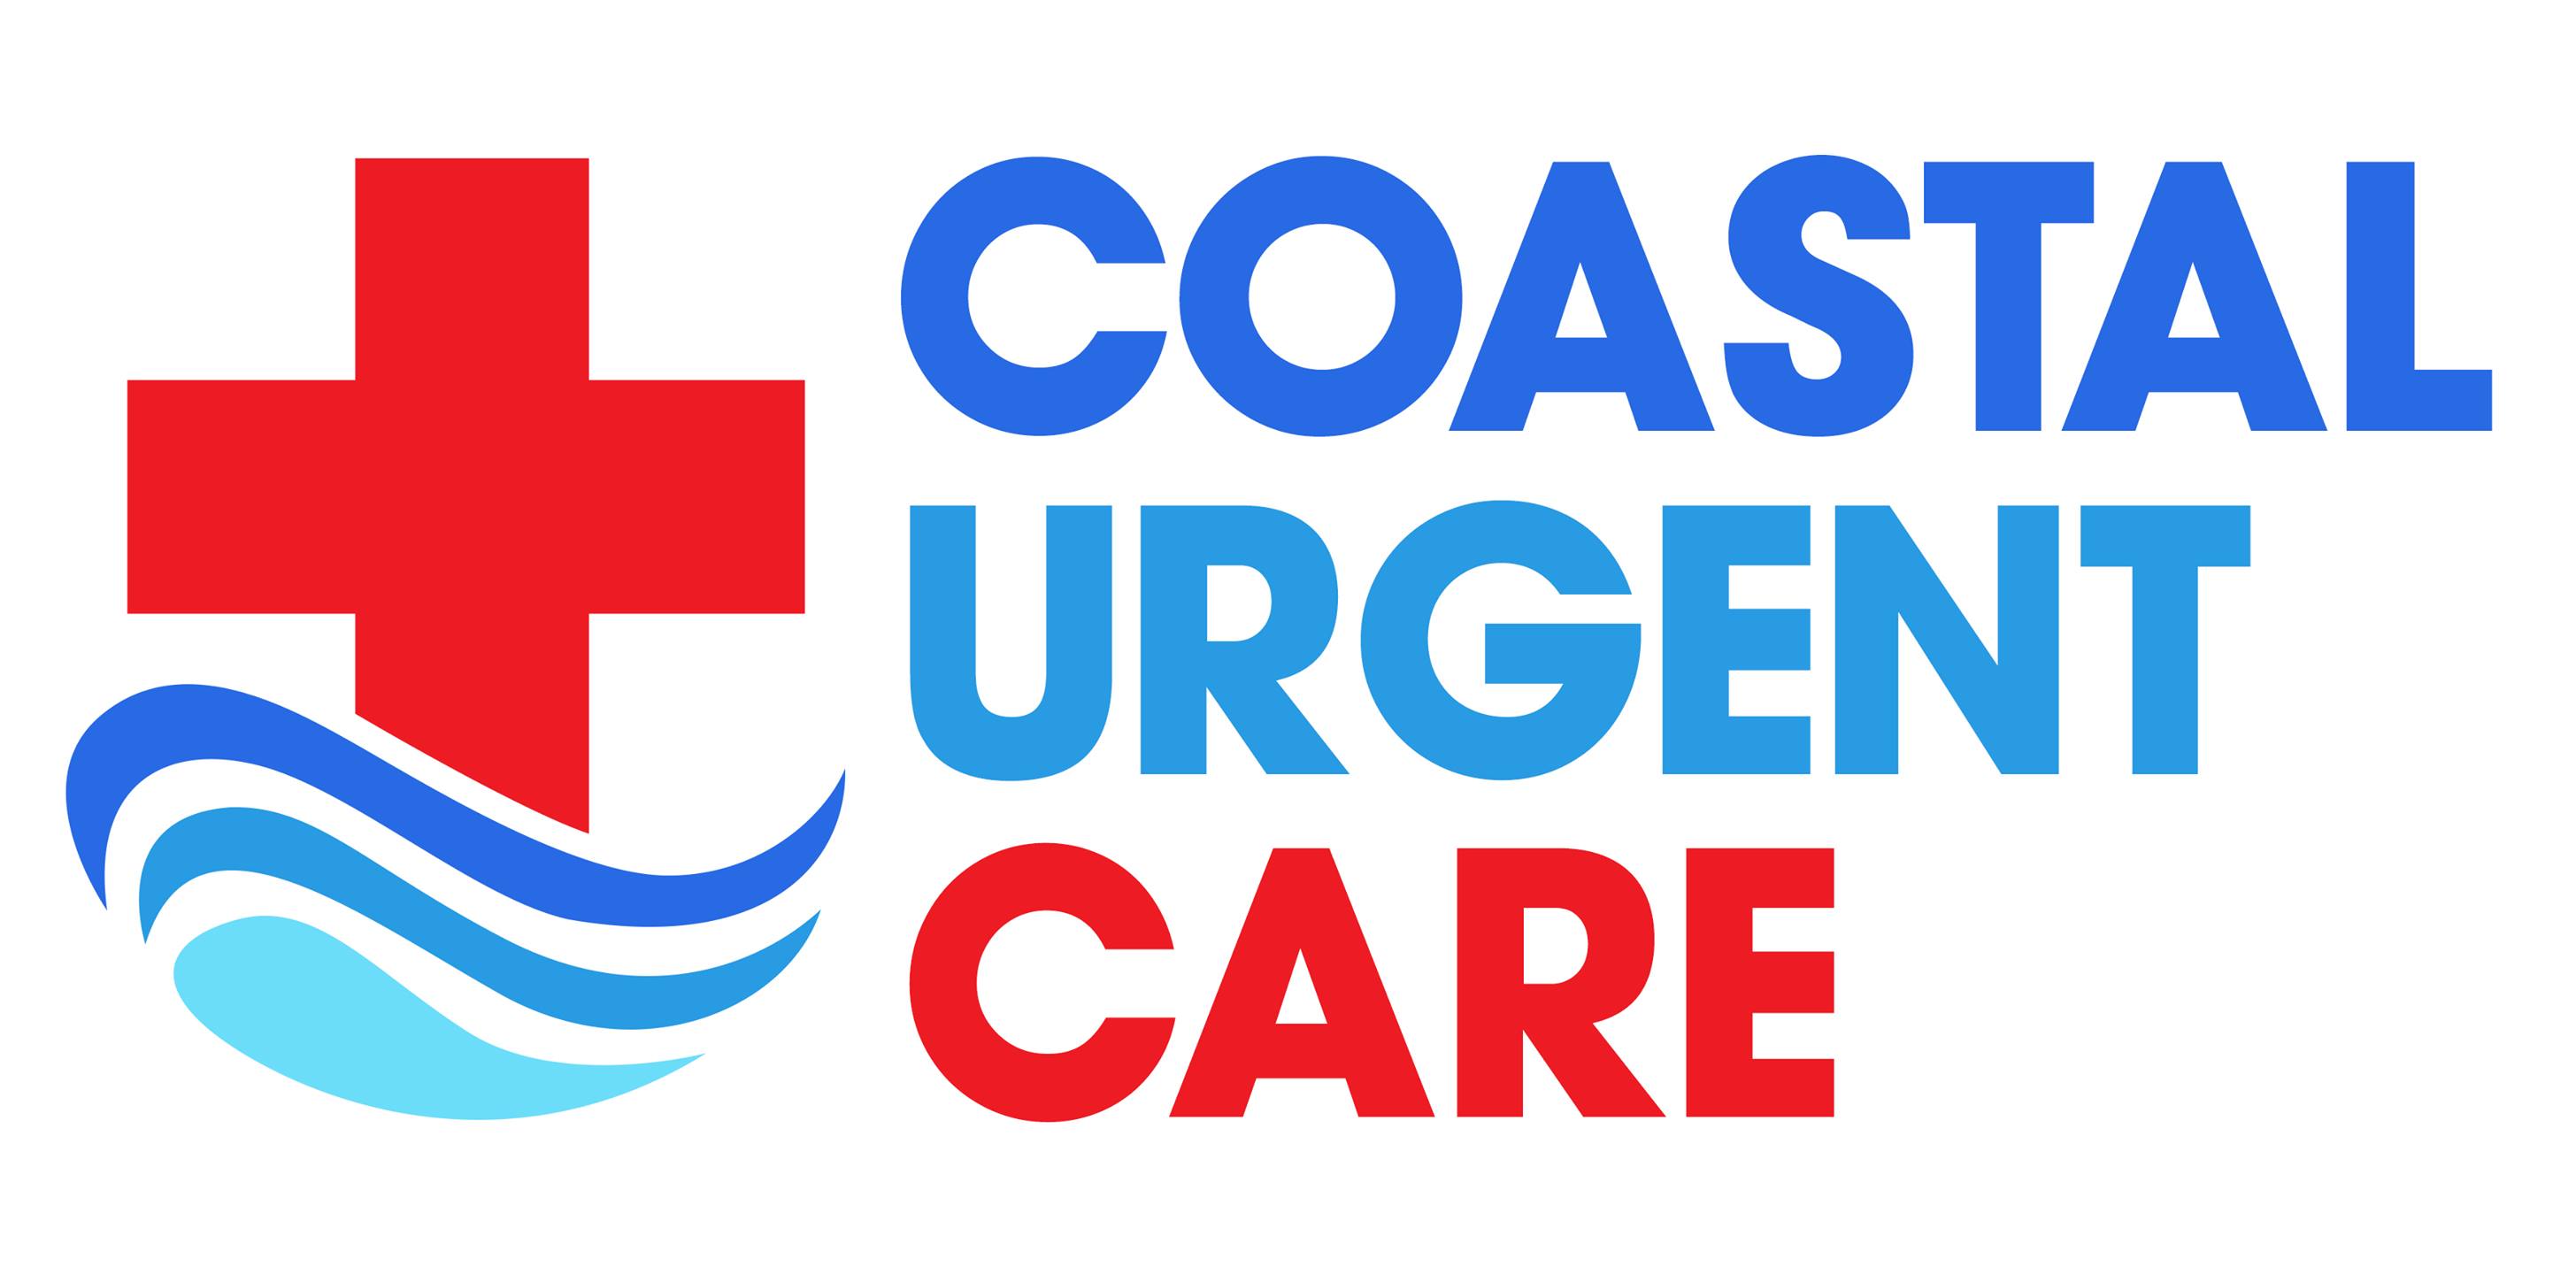 Coastal family urgent care Idea